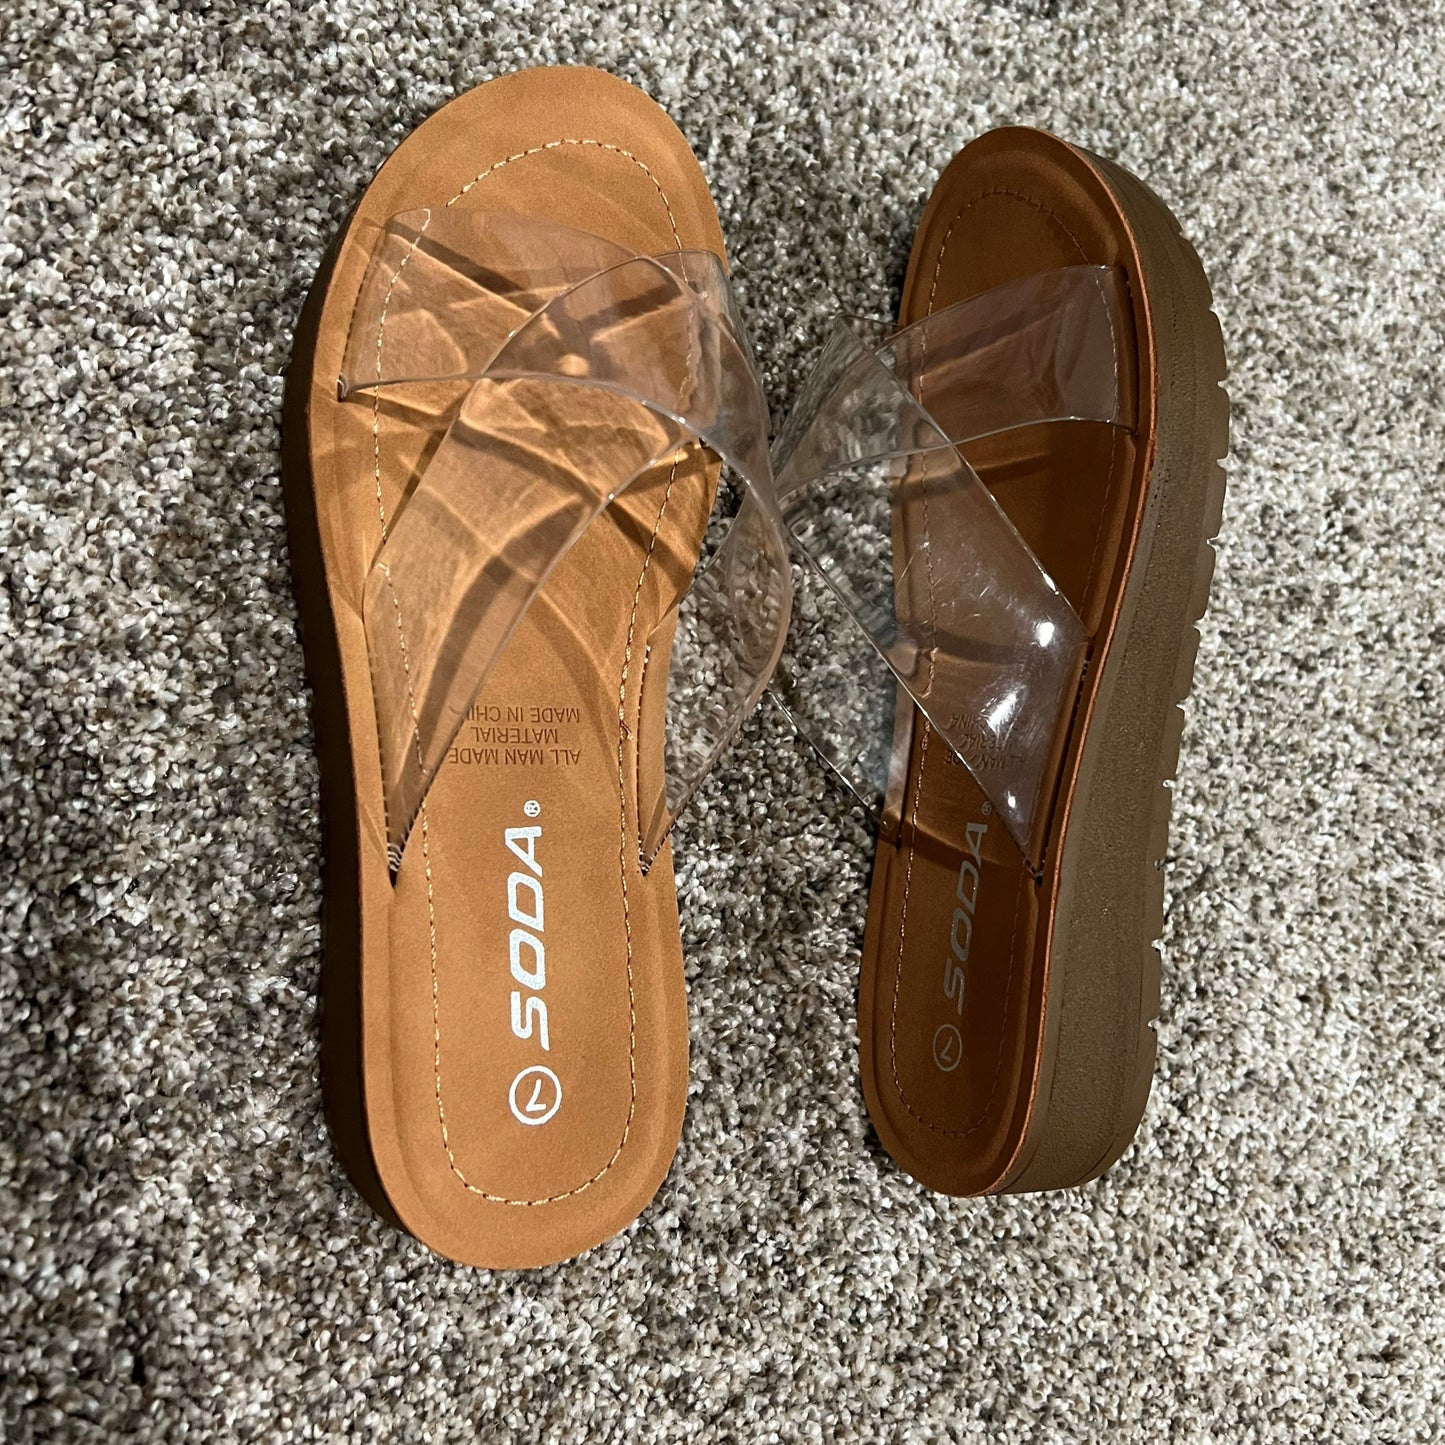 Sennet sandals- clear